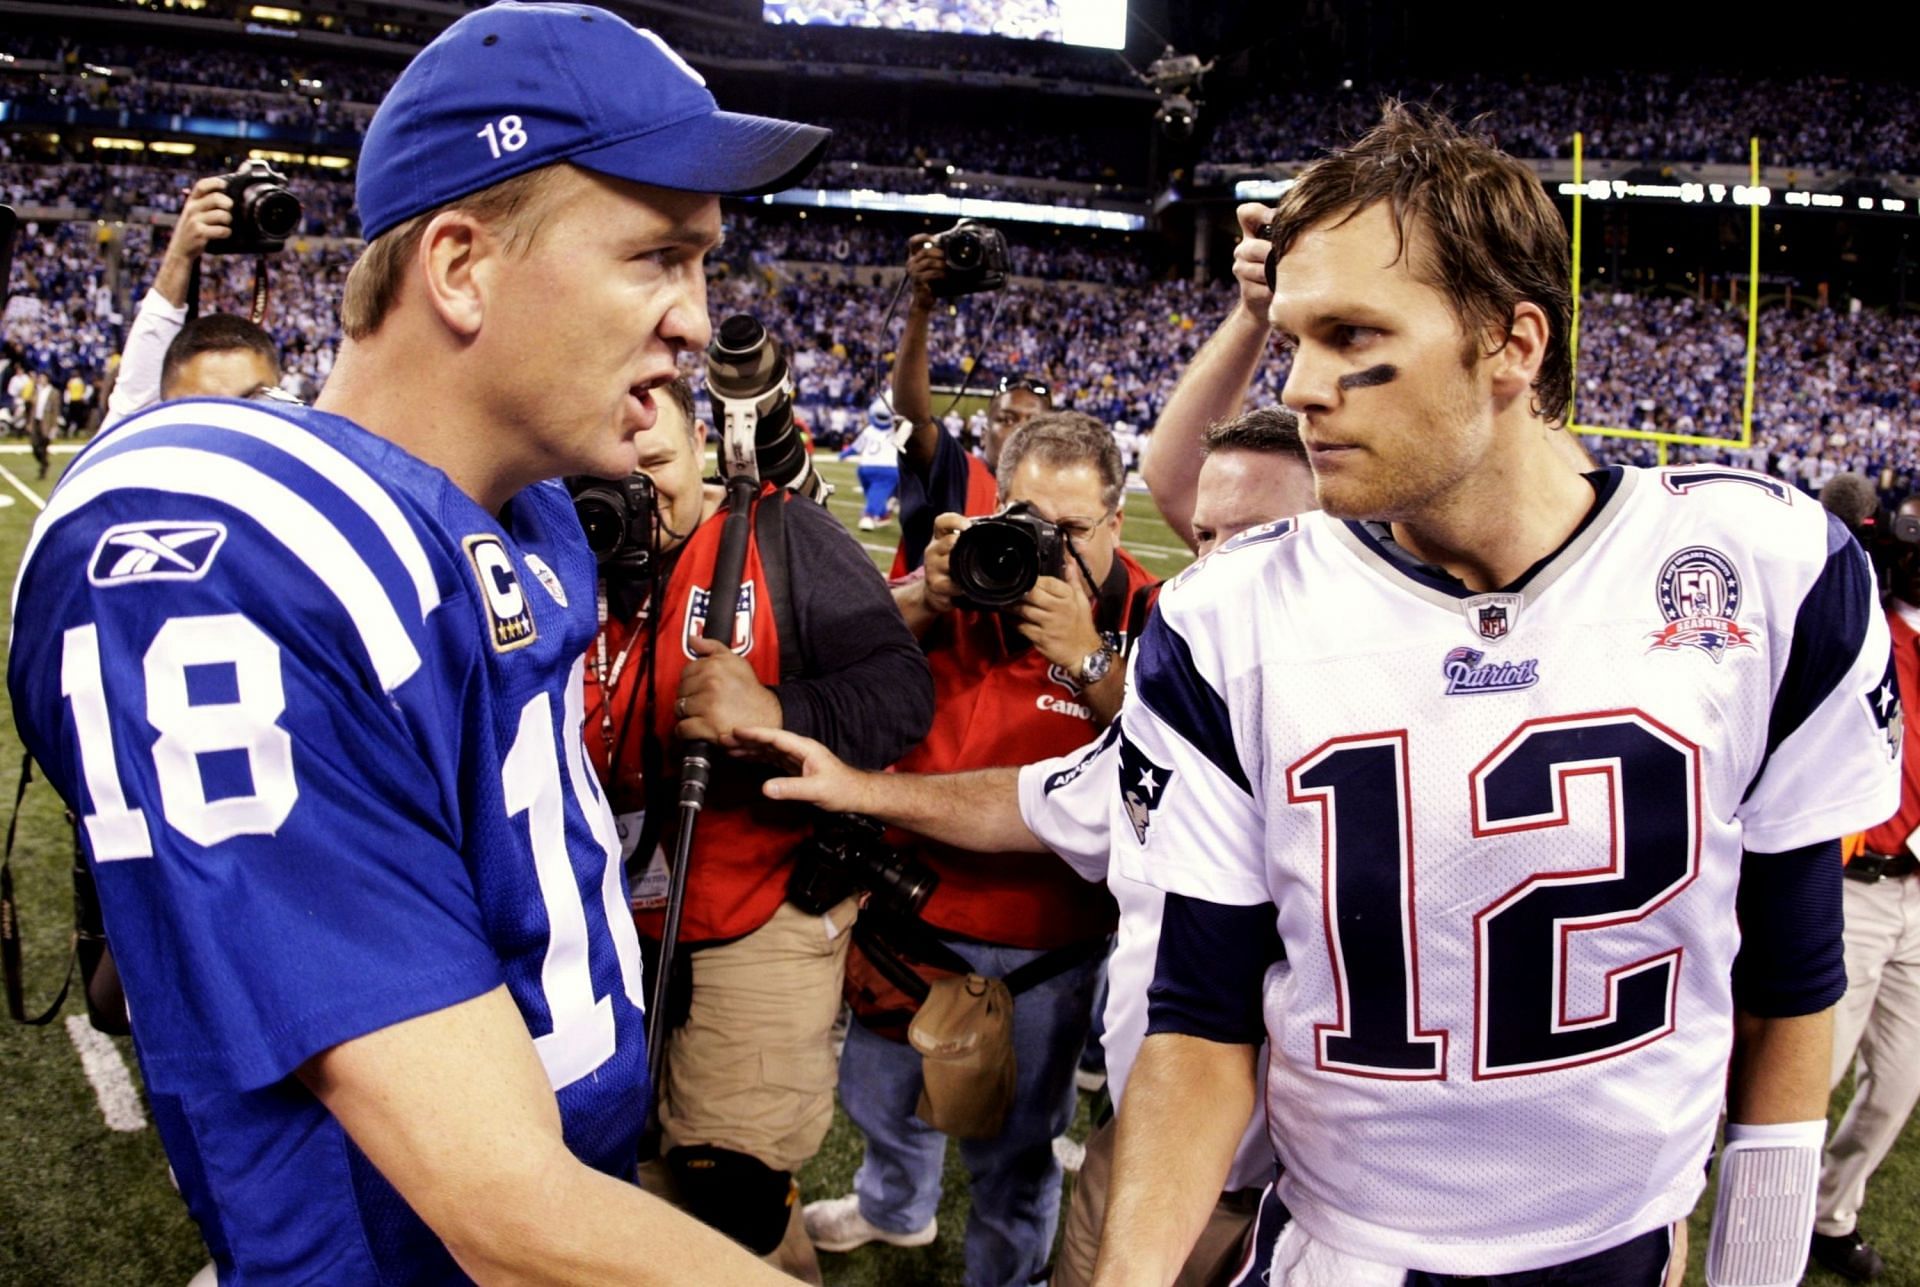 Quarterbacks Peyton Manning and Tom Brady